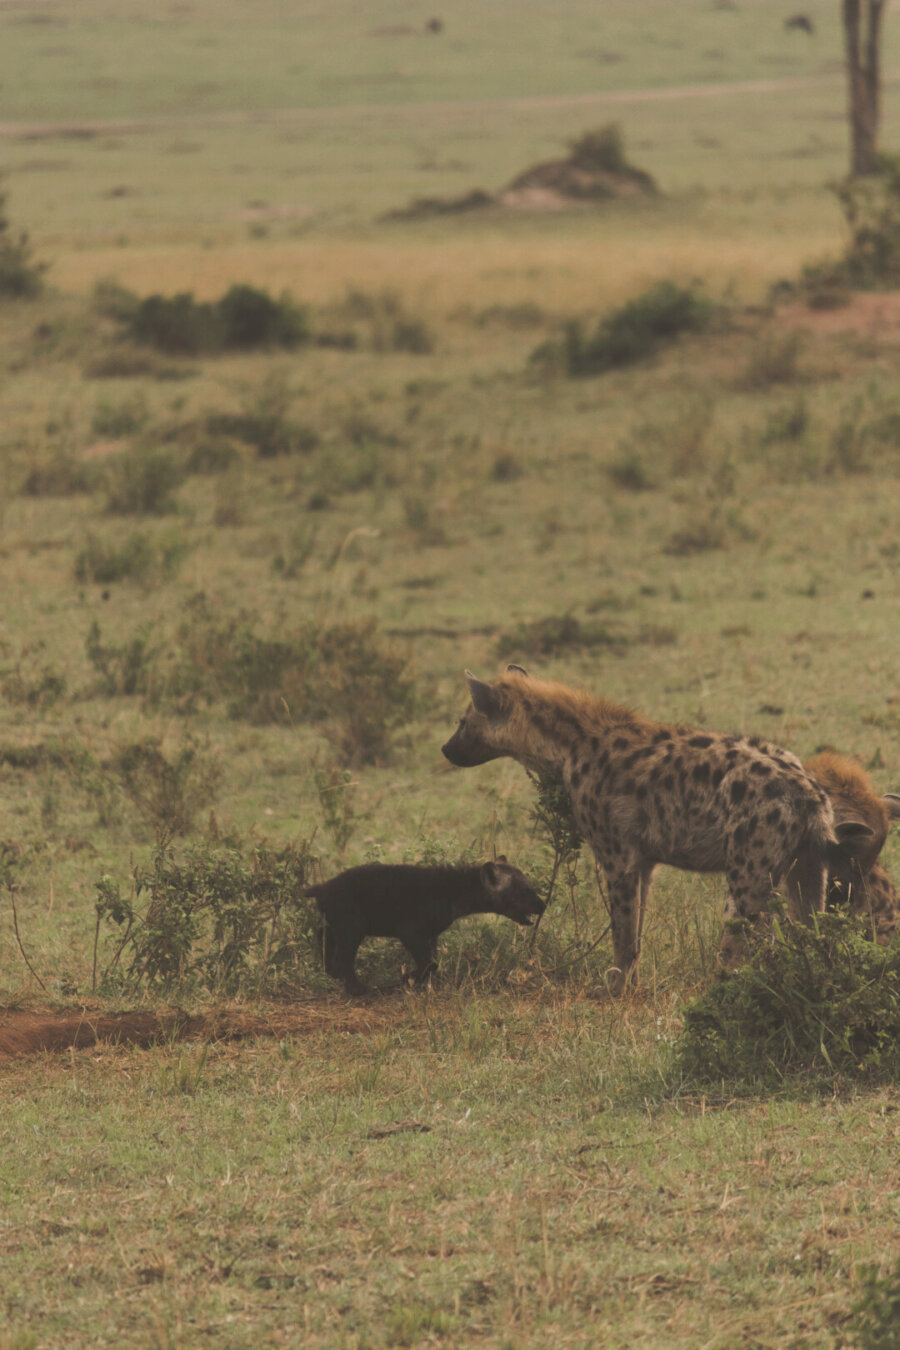 Hyenas with small baby hyena